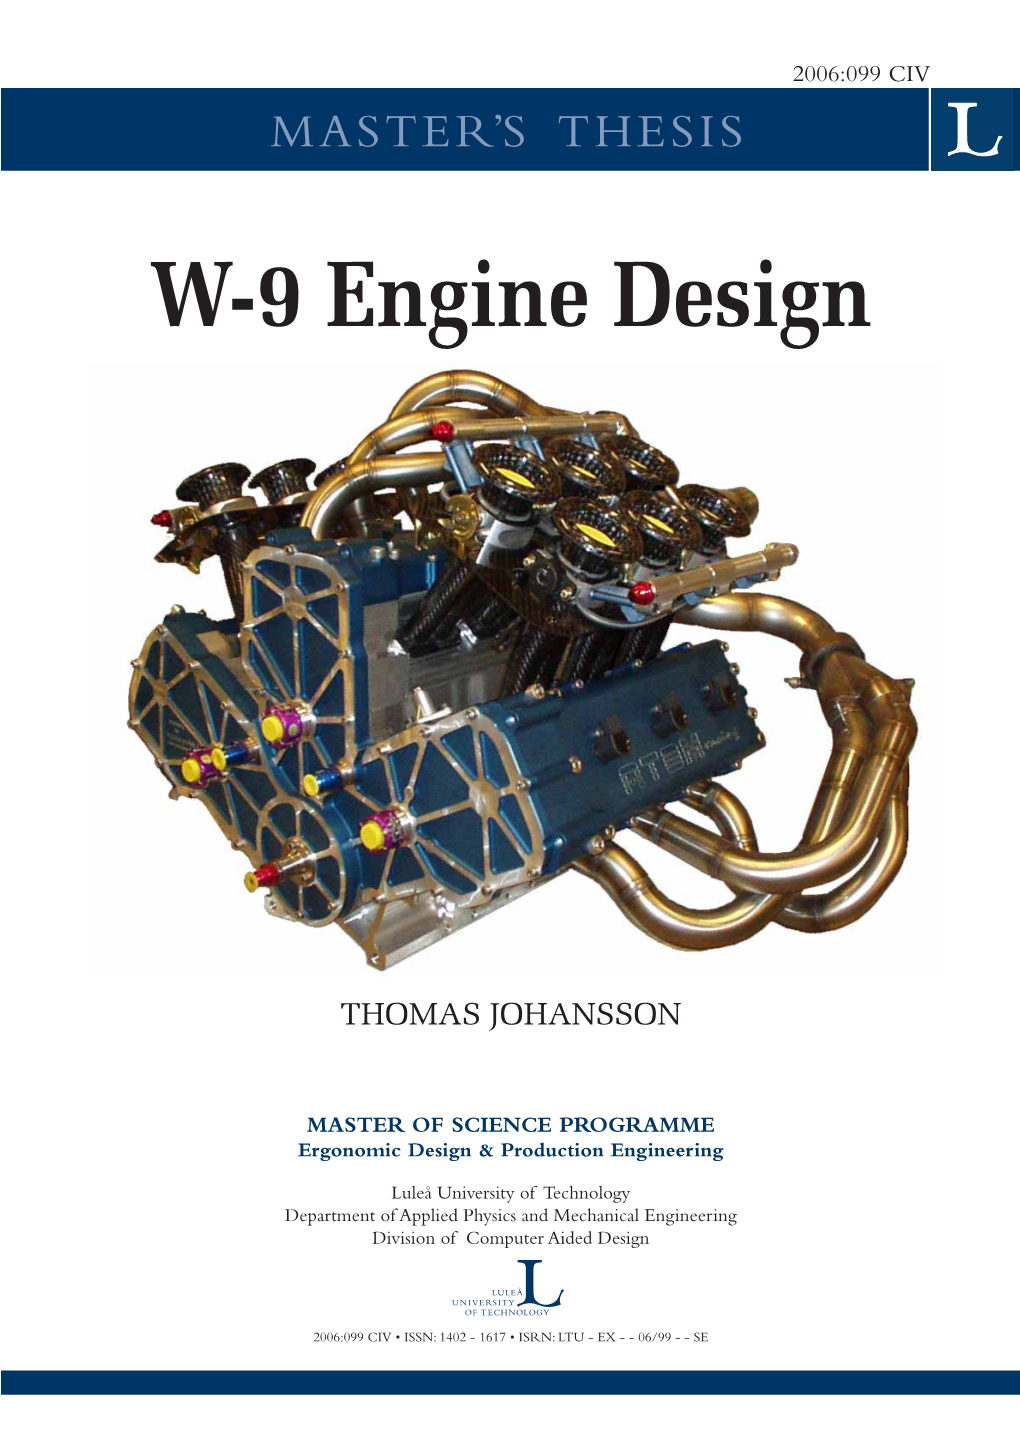 W-9 Engine Design